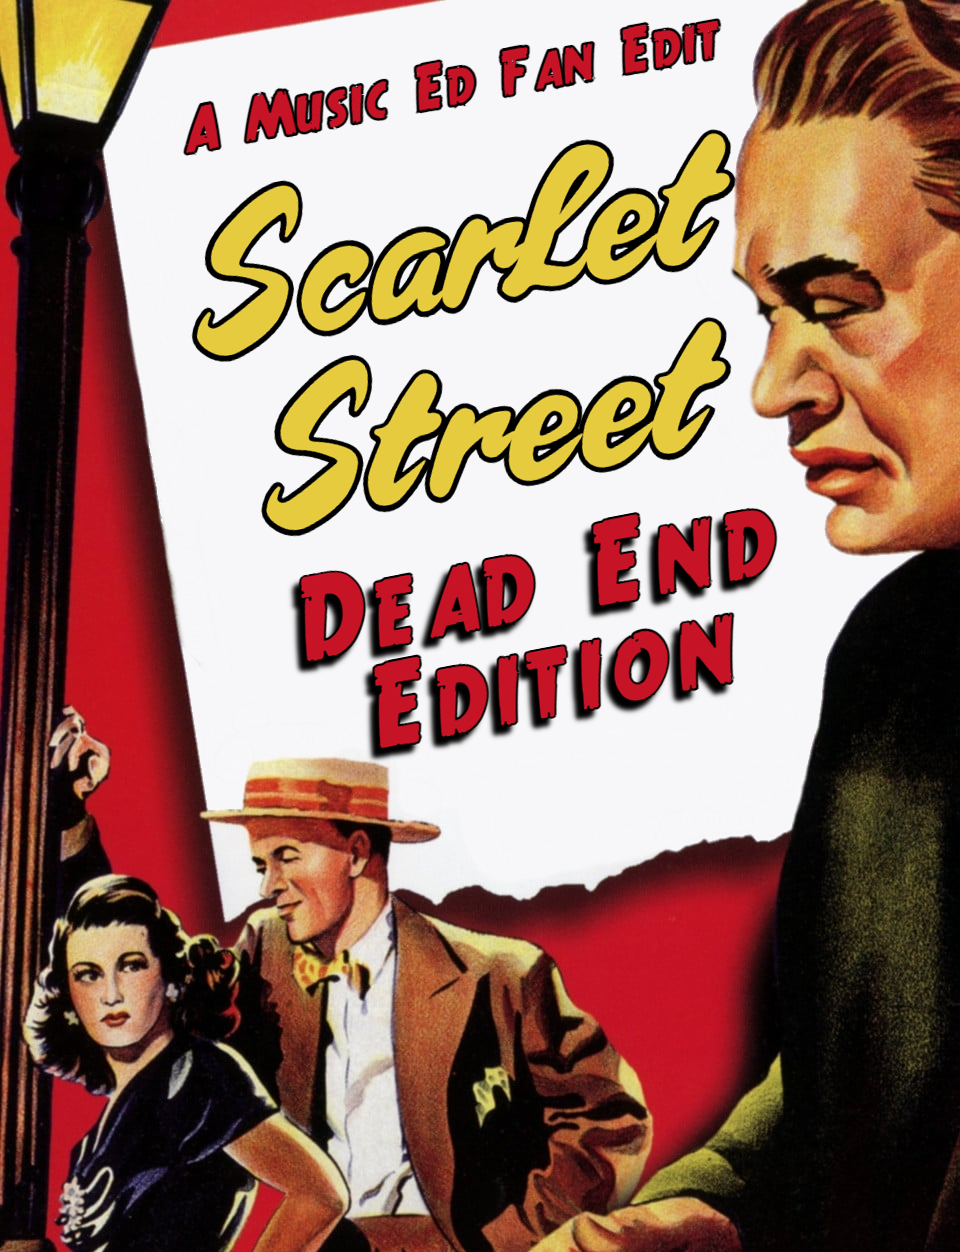 Scarlet Street Poster.jpg